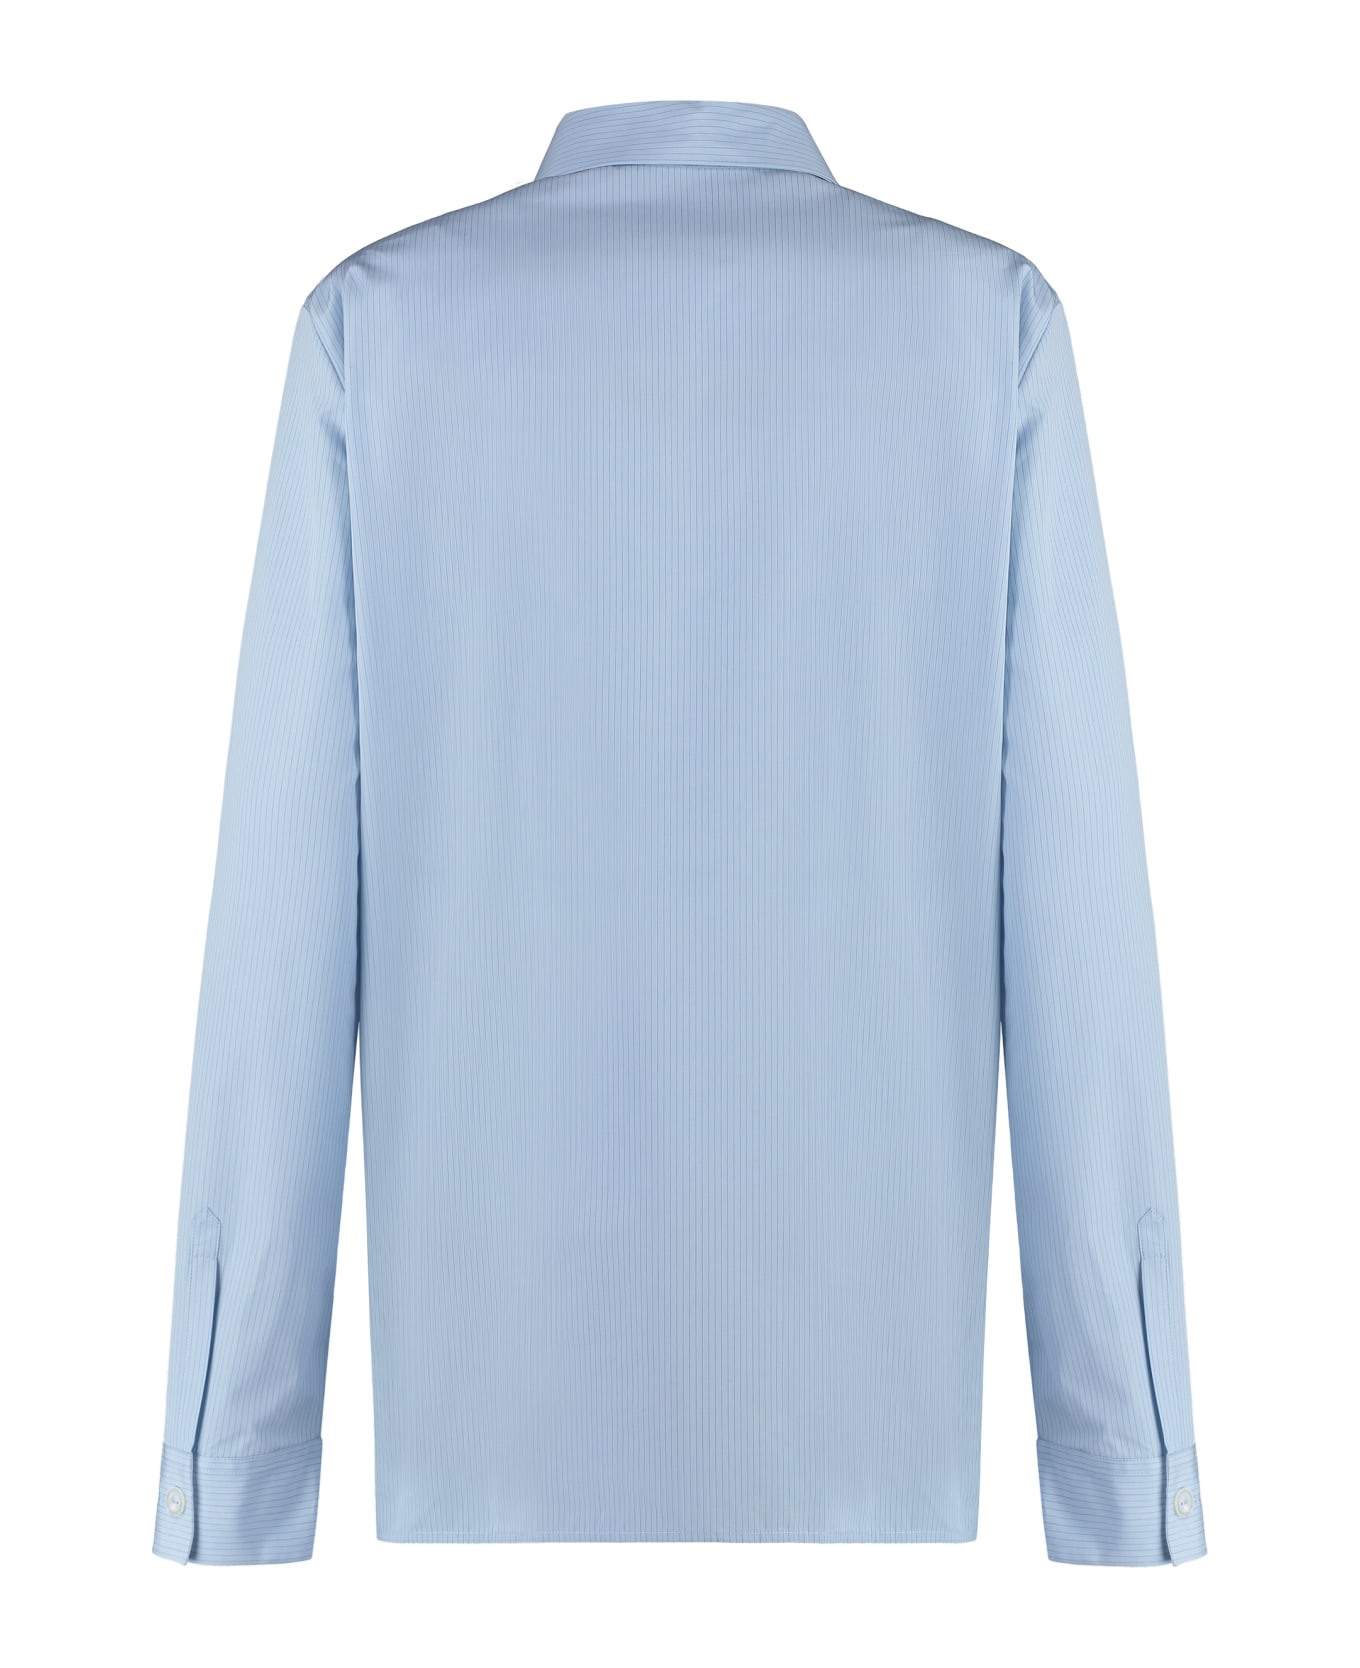 Jil Sander Striped Cotton Shirt - Light Blue